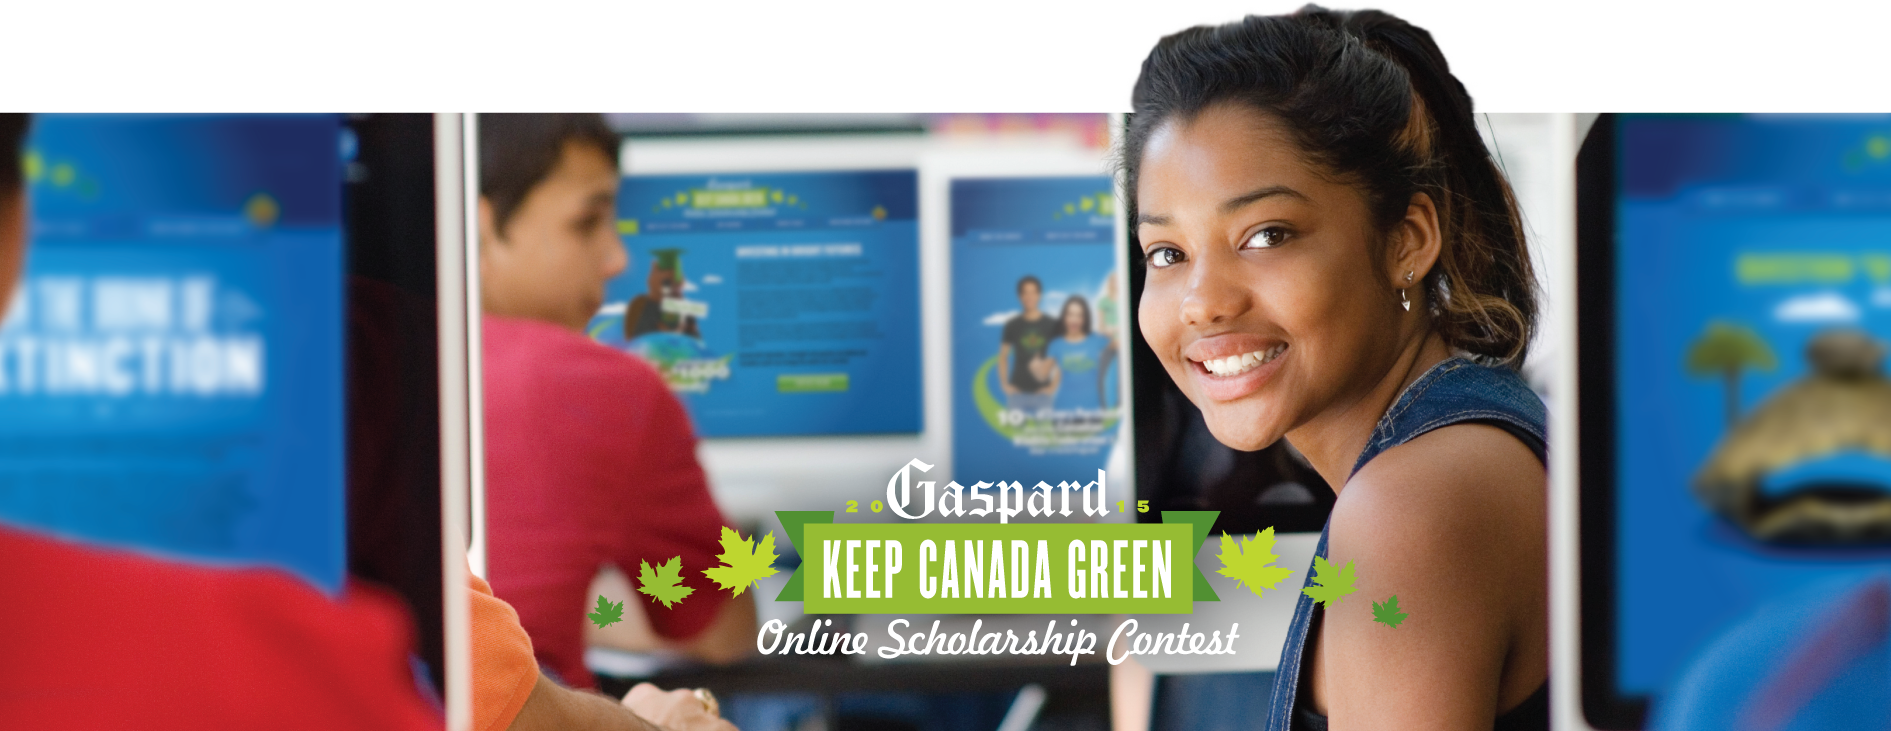 Gaspard - Keep Canada Green Contest